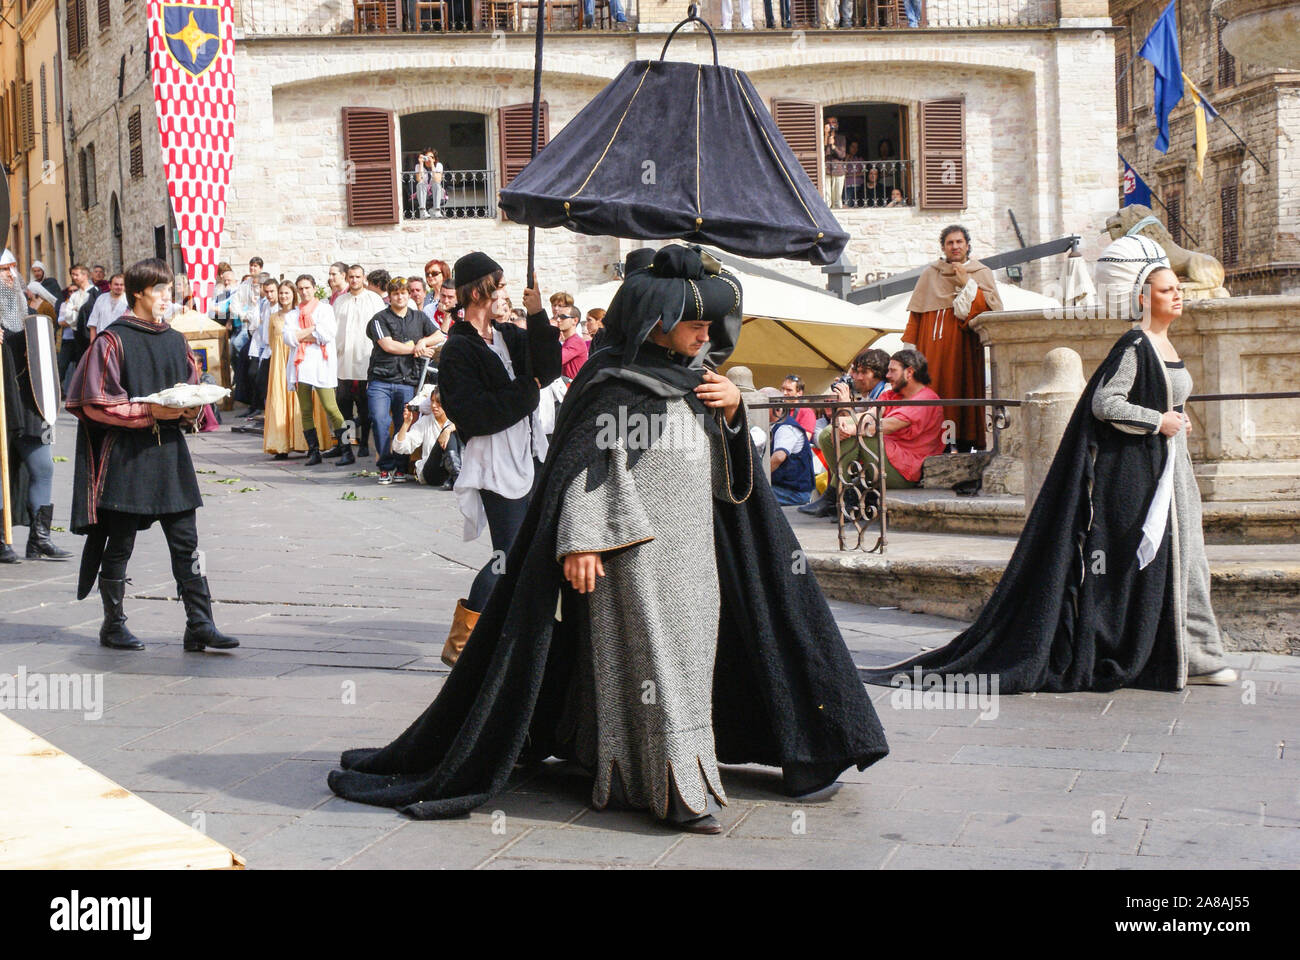 Calendimaggio 2009 - Mittelalterliches Fest in Assisi, Italien, Europa Stock Photo